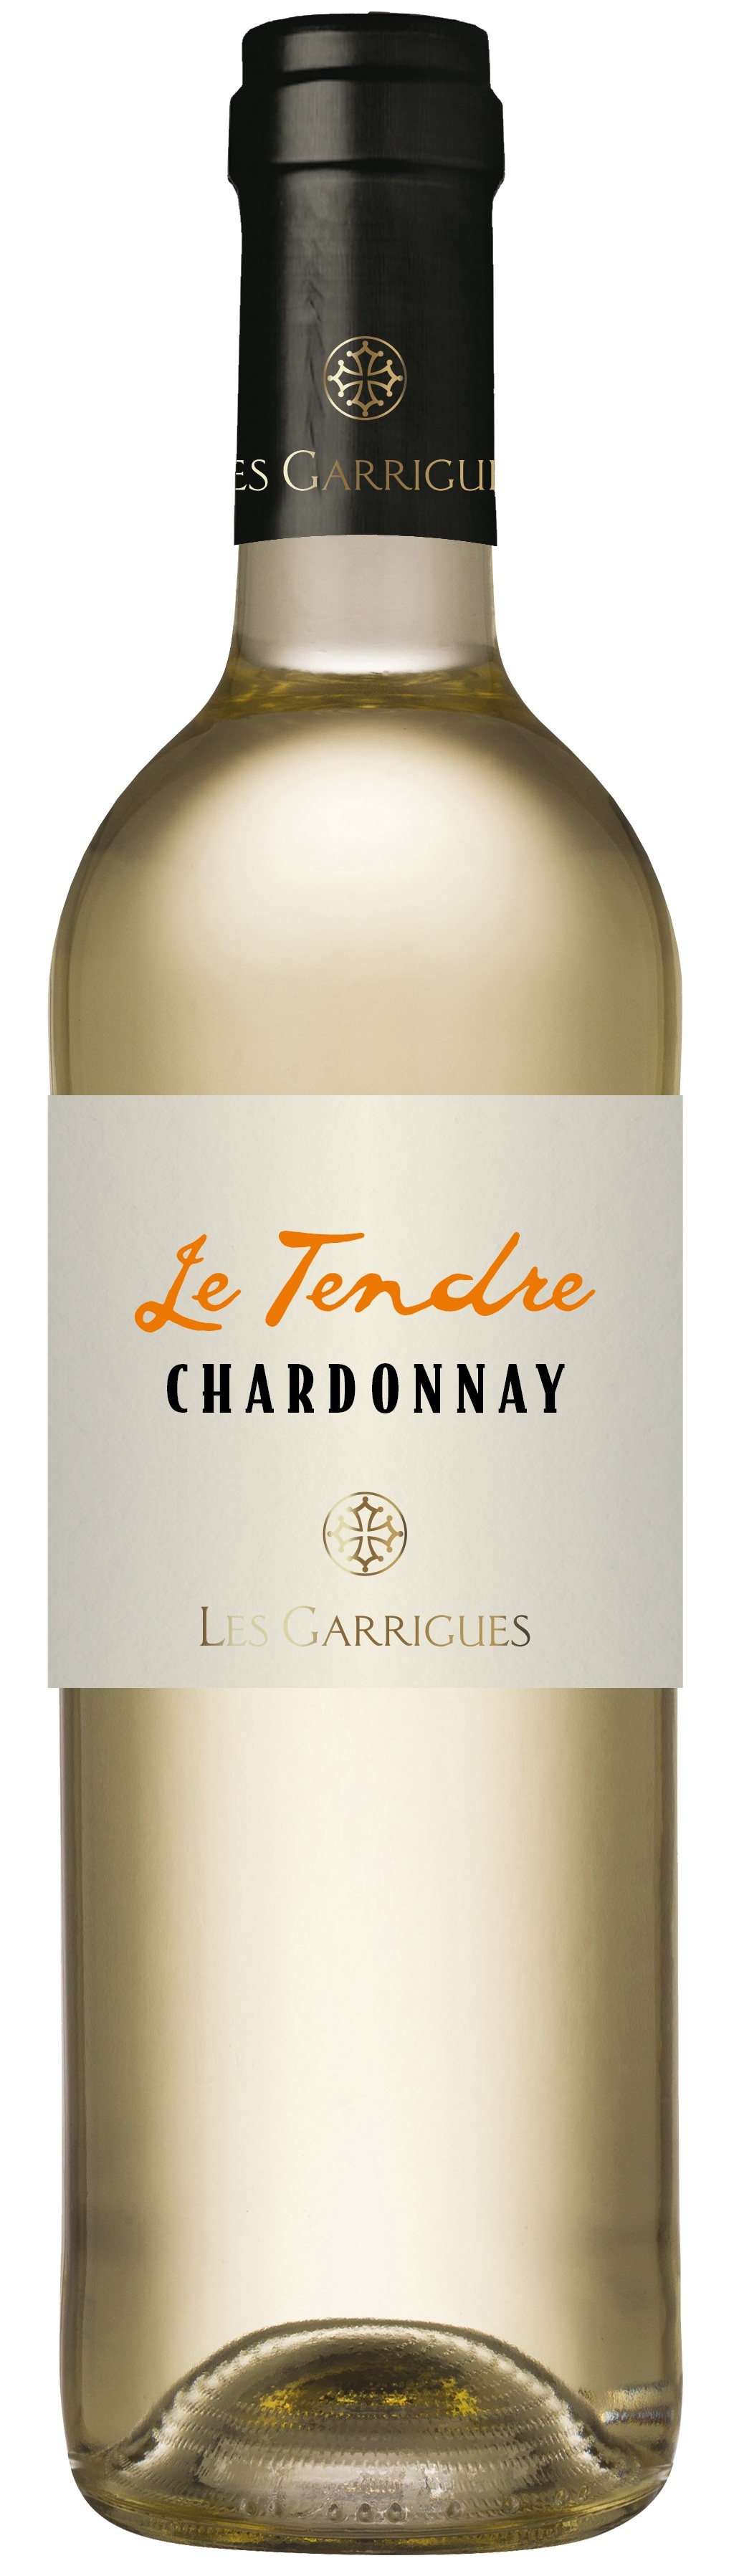 Les Garrigues Premium IGP Oc chardonnay